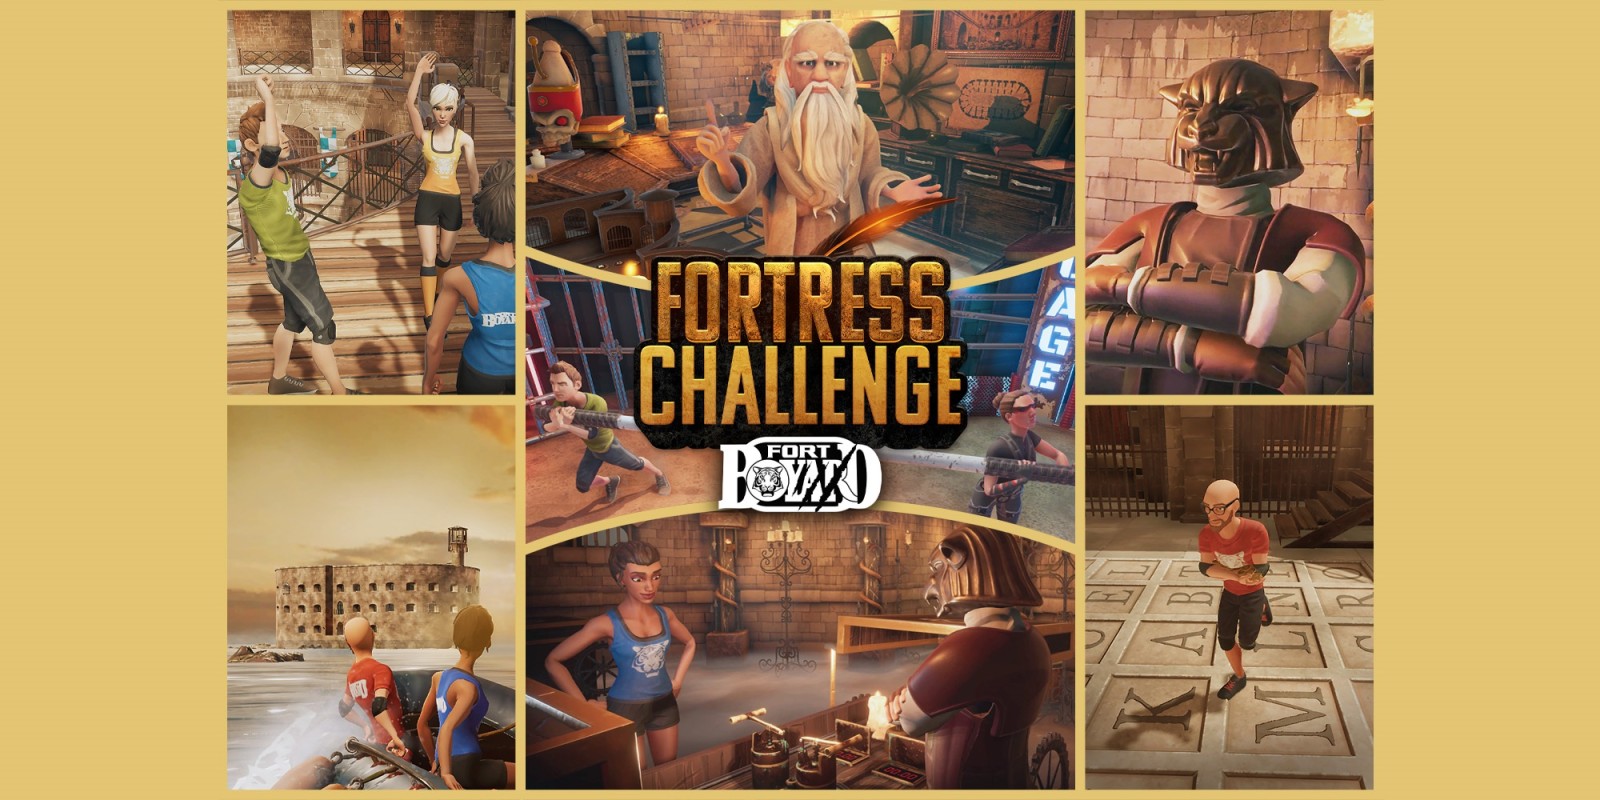 Fortress Challenge - Fort Boyard